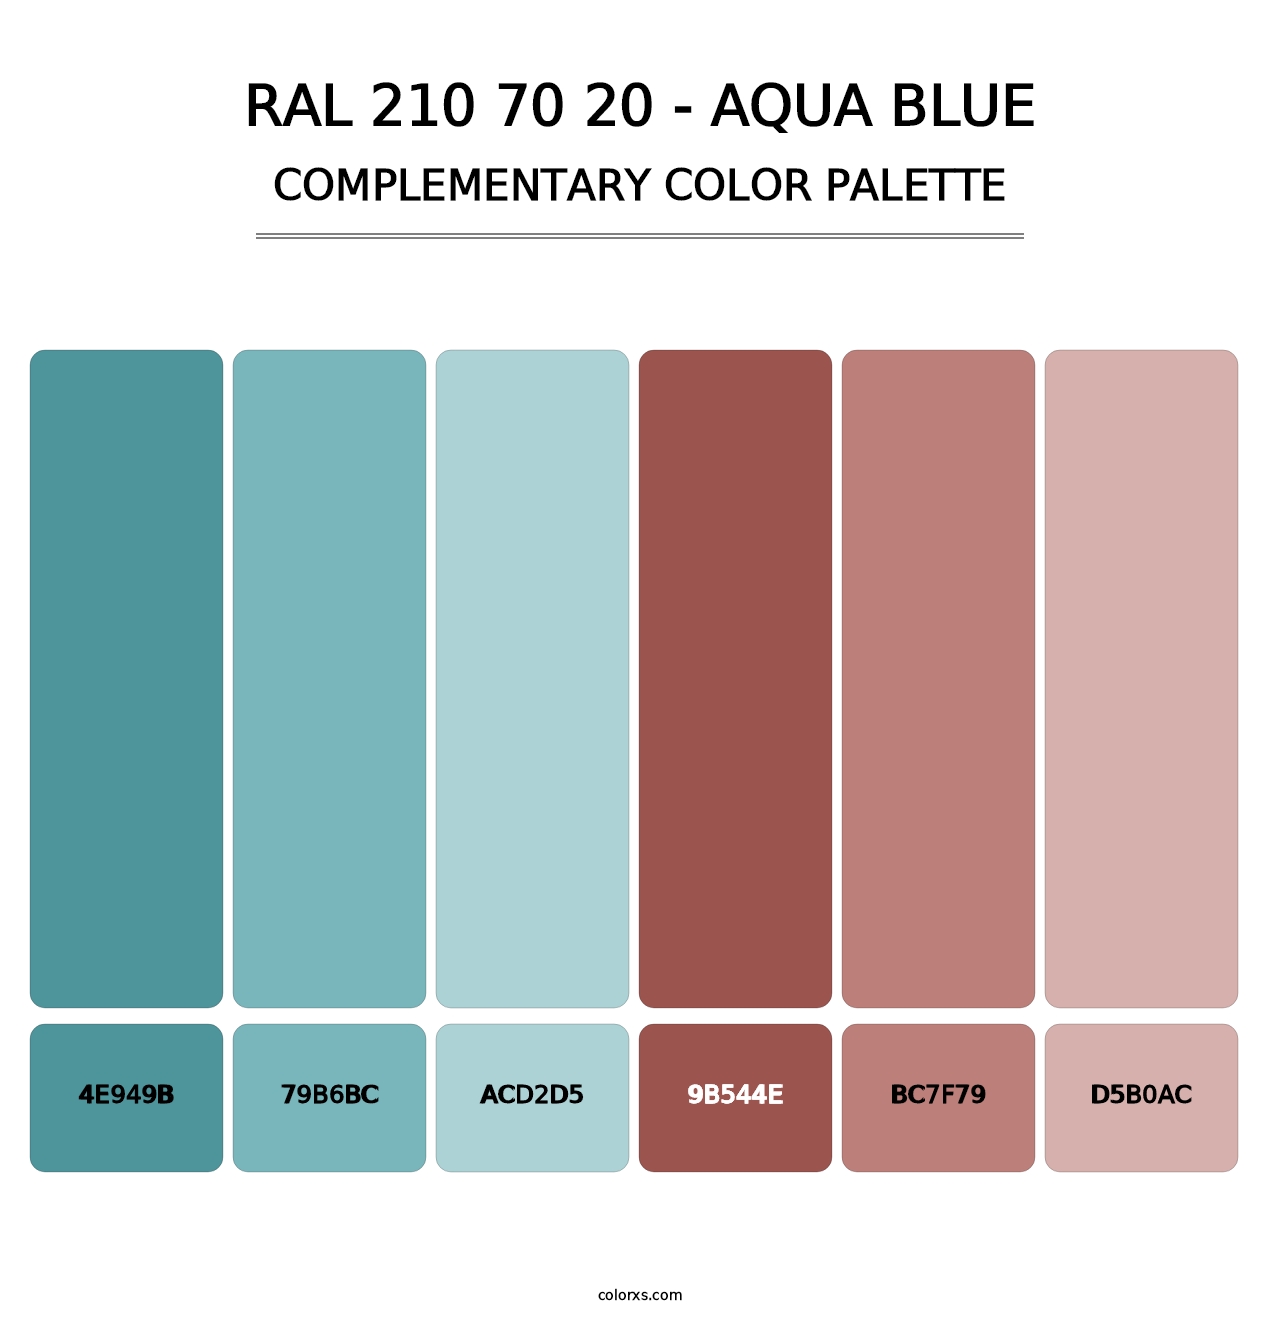 RAL 210 70 20 - Aqua Blue - Complementary Color Palette